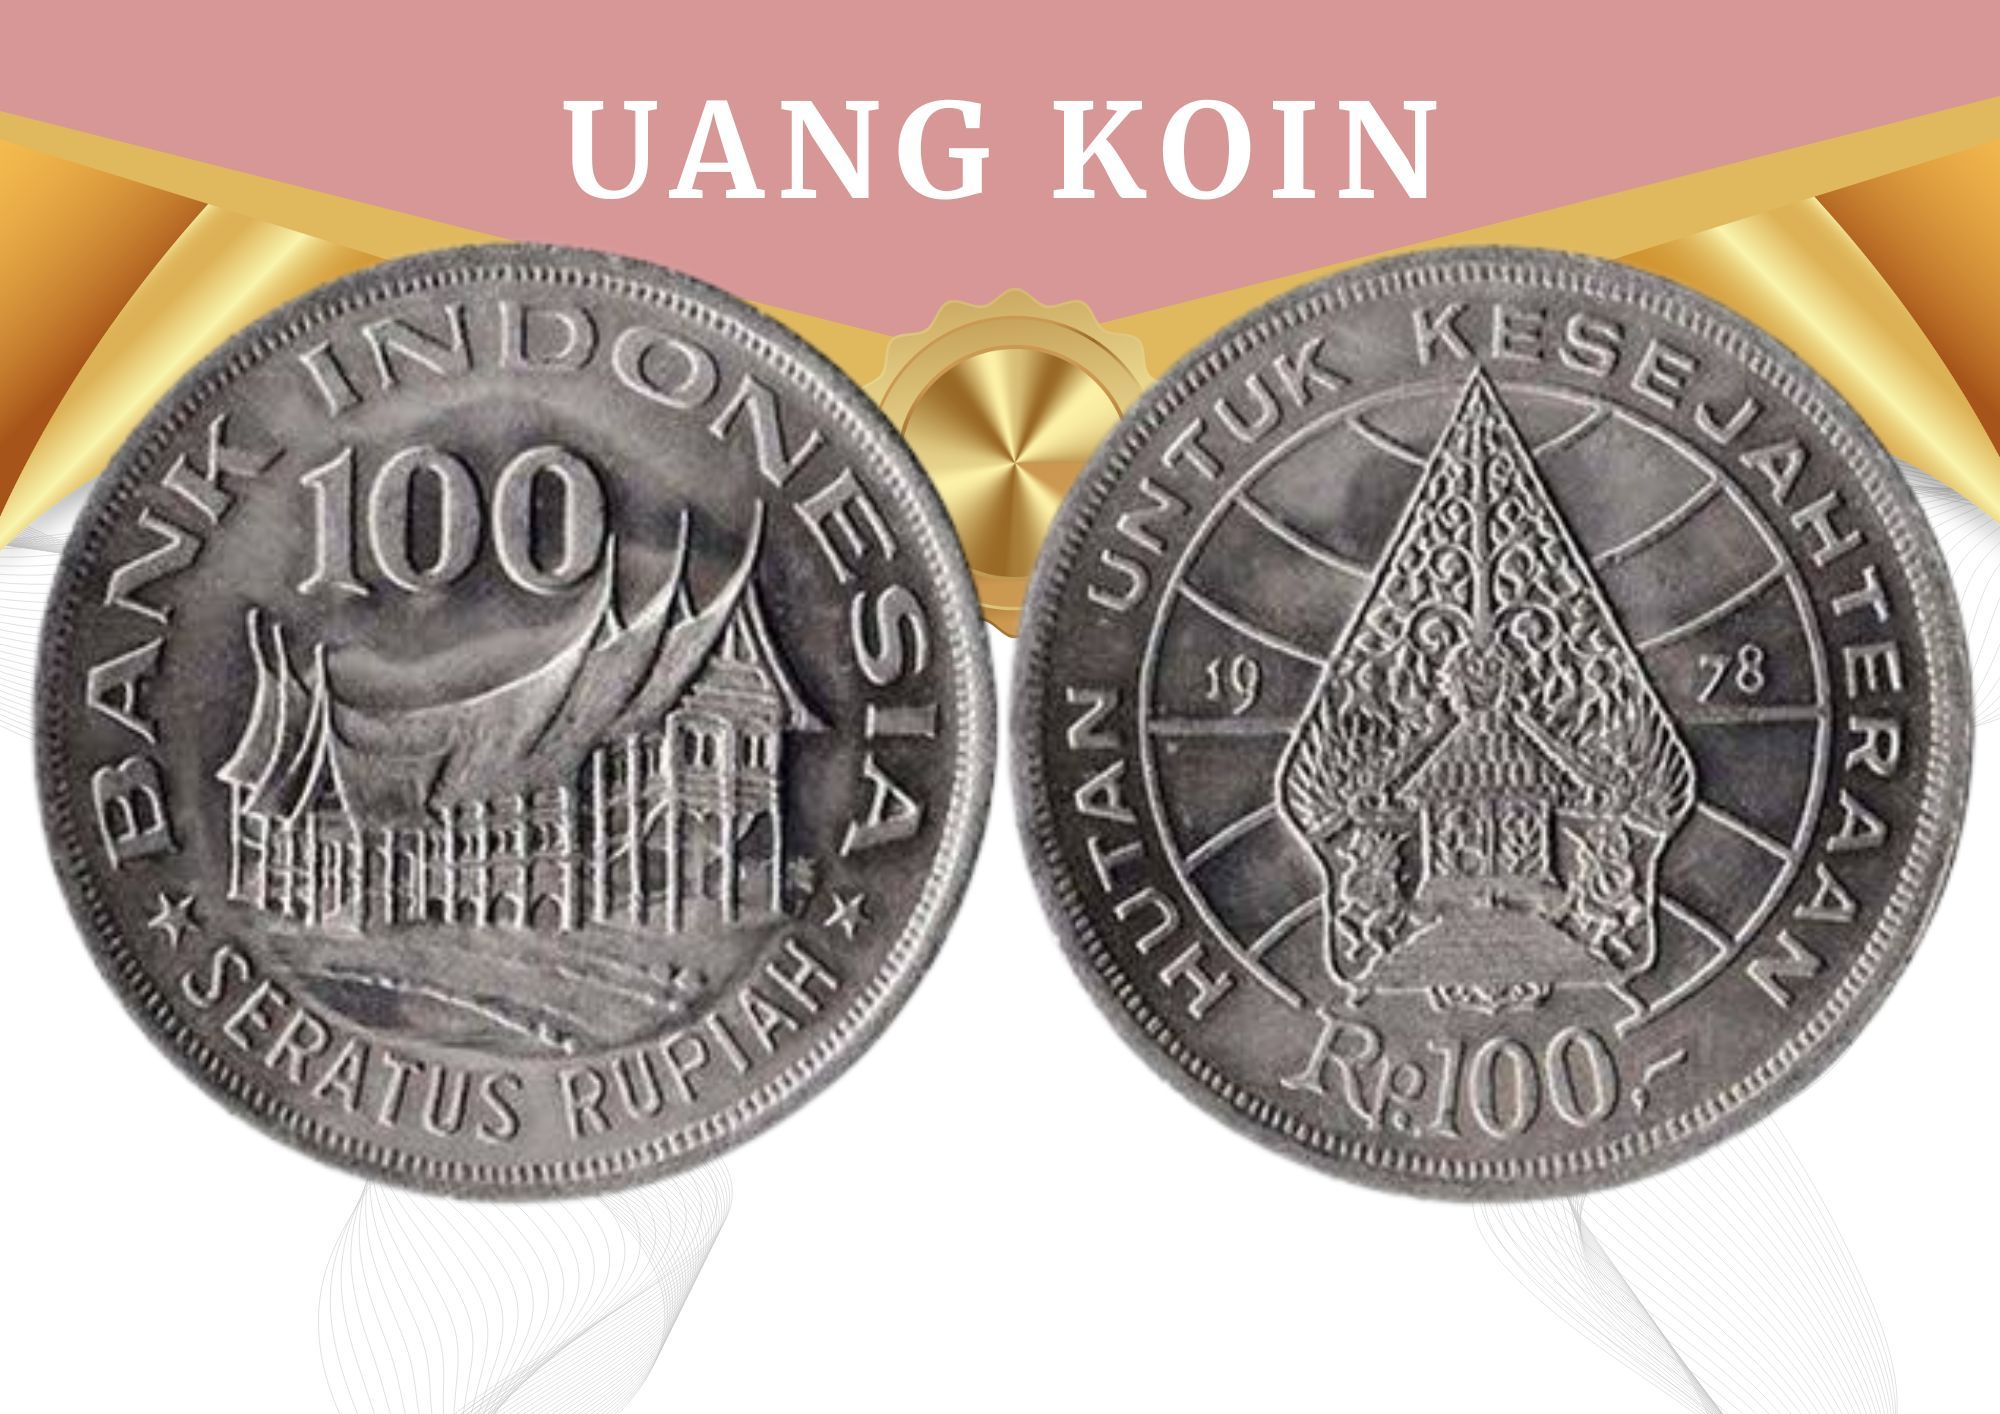 Uang Koin Rp 100 Tahun Emisi 1978